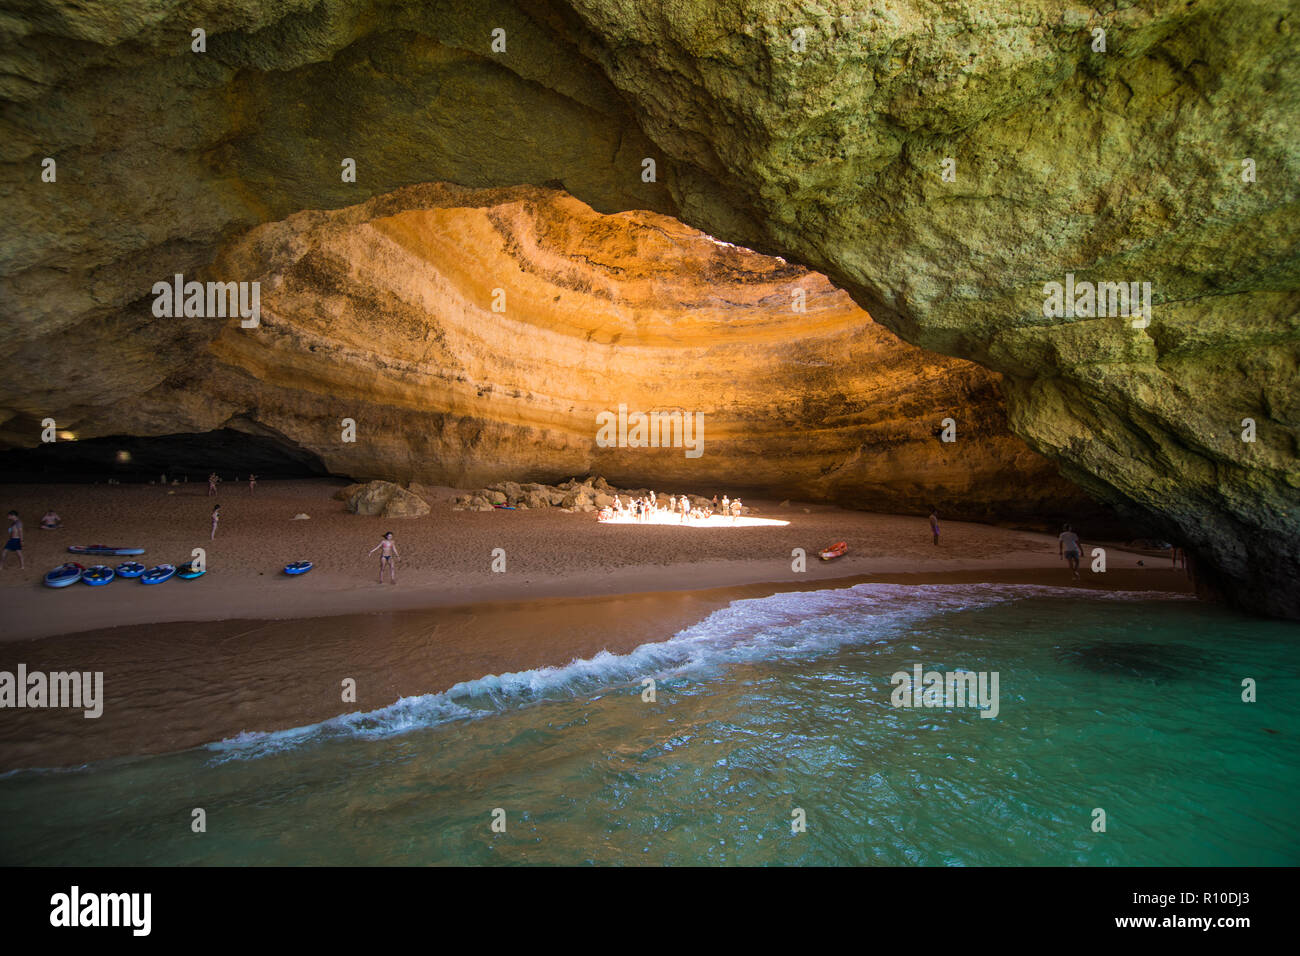 Benagil, Portugal - Juny, 2018: Benagil Cave Boat Tour inside Algar de Benagil, cave listed in the world's top 10 best caves. Algarve coast near Lagoa Stock Photo